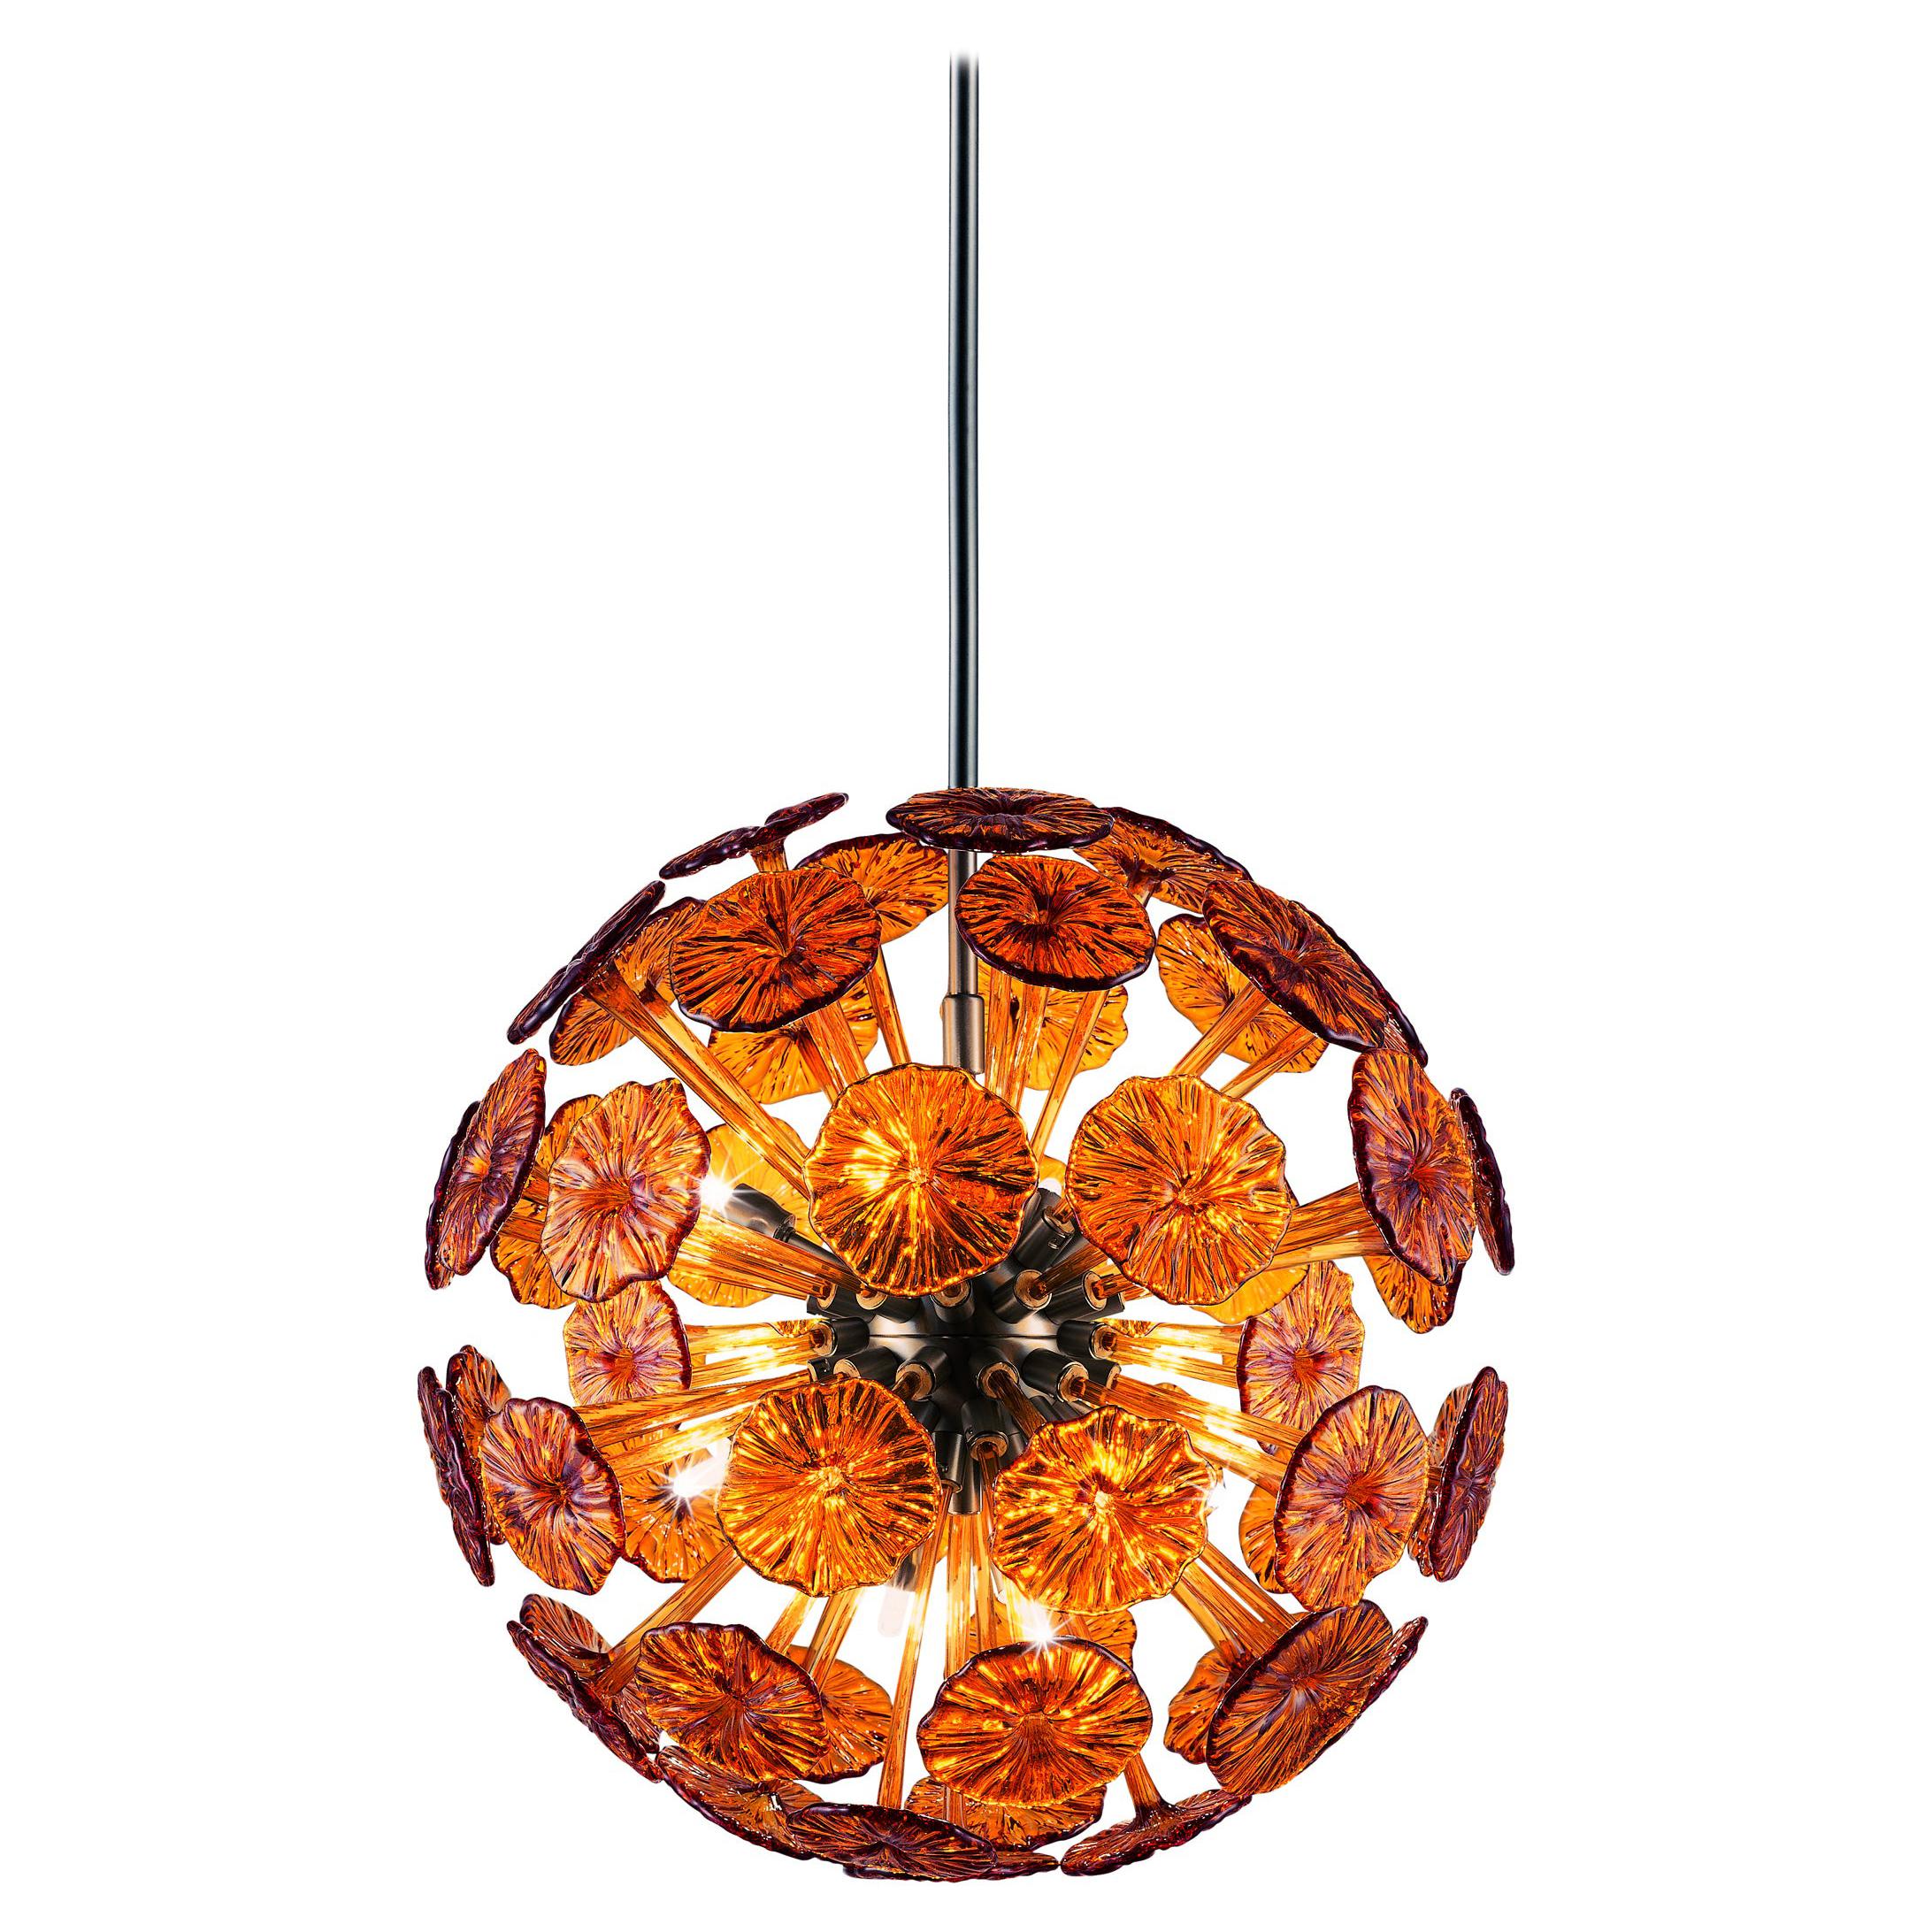 Artistic Blown Handmade Murano Glass Chandelier Planet by La Murrina